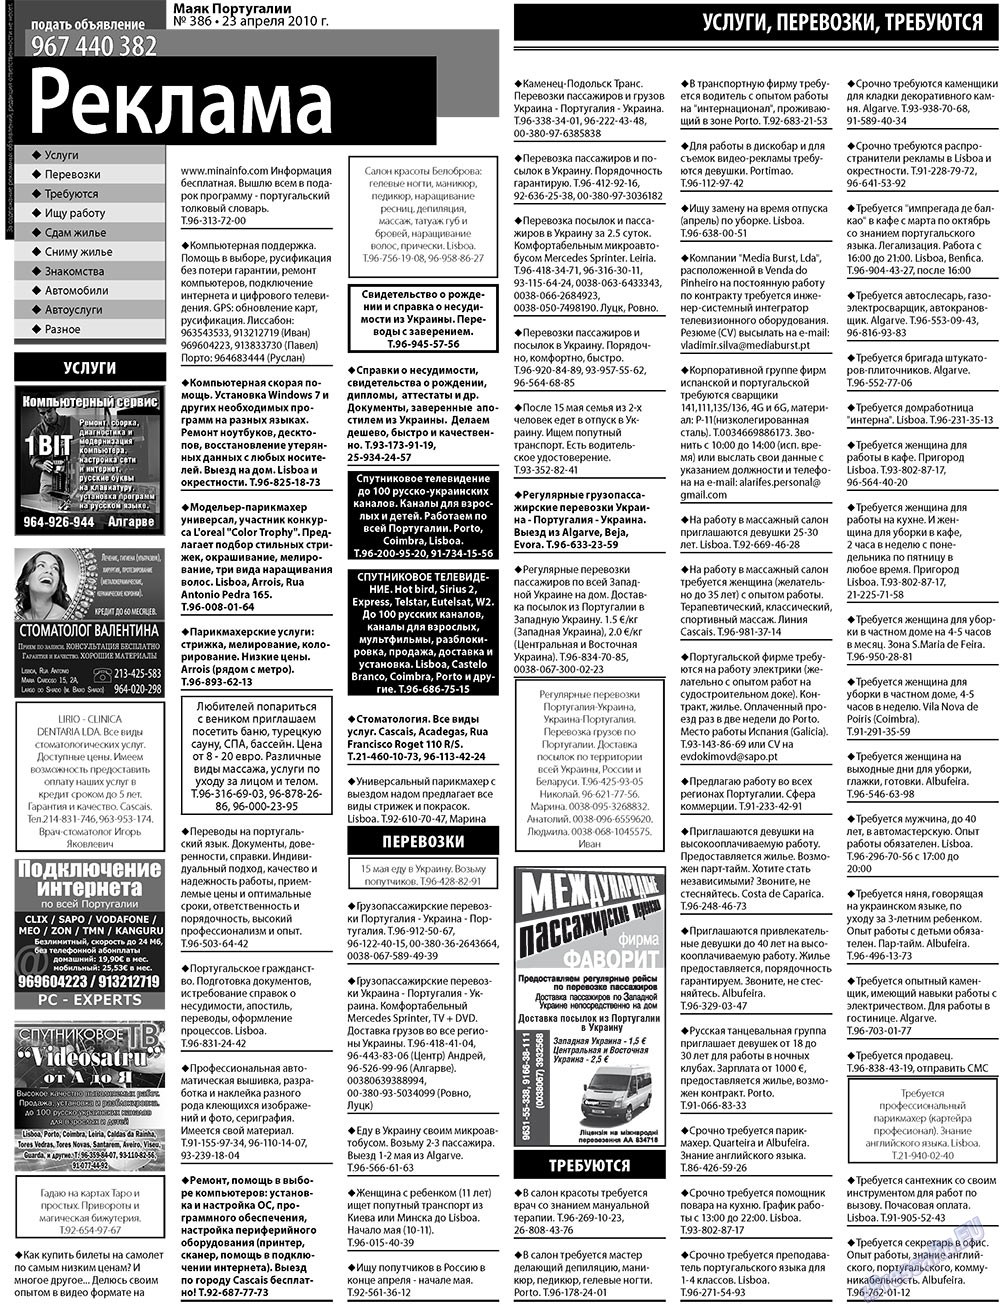 Маяк Португалии, газета. 2010 №386 стр.34